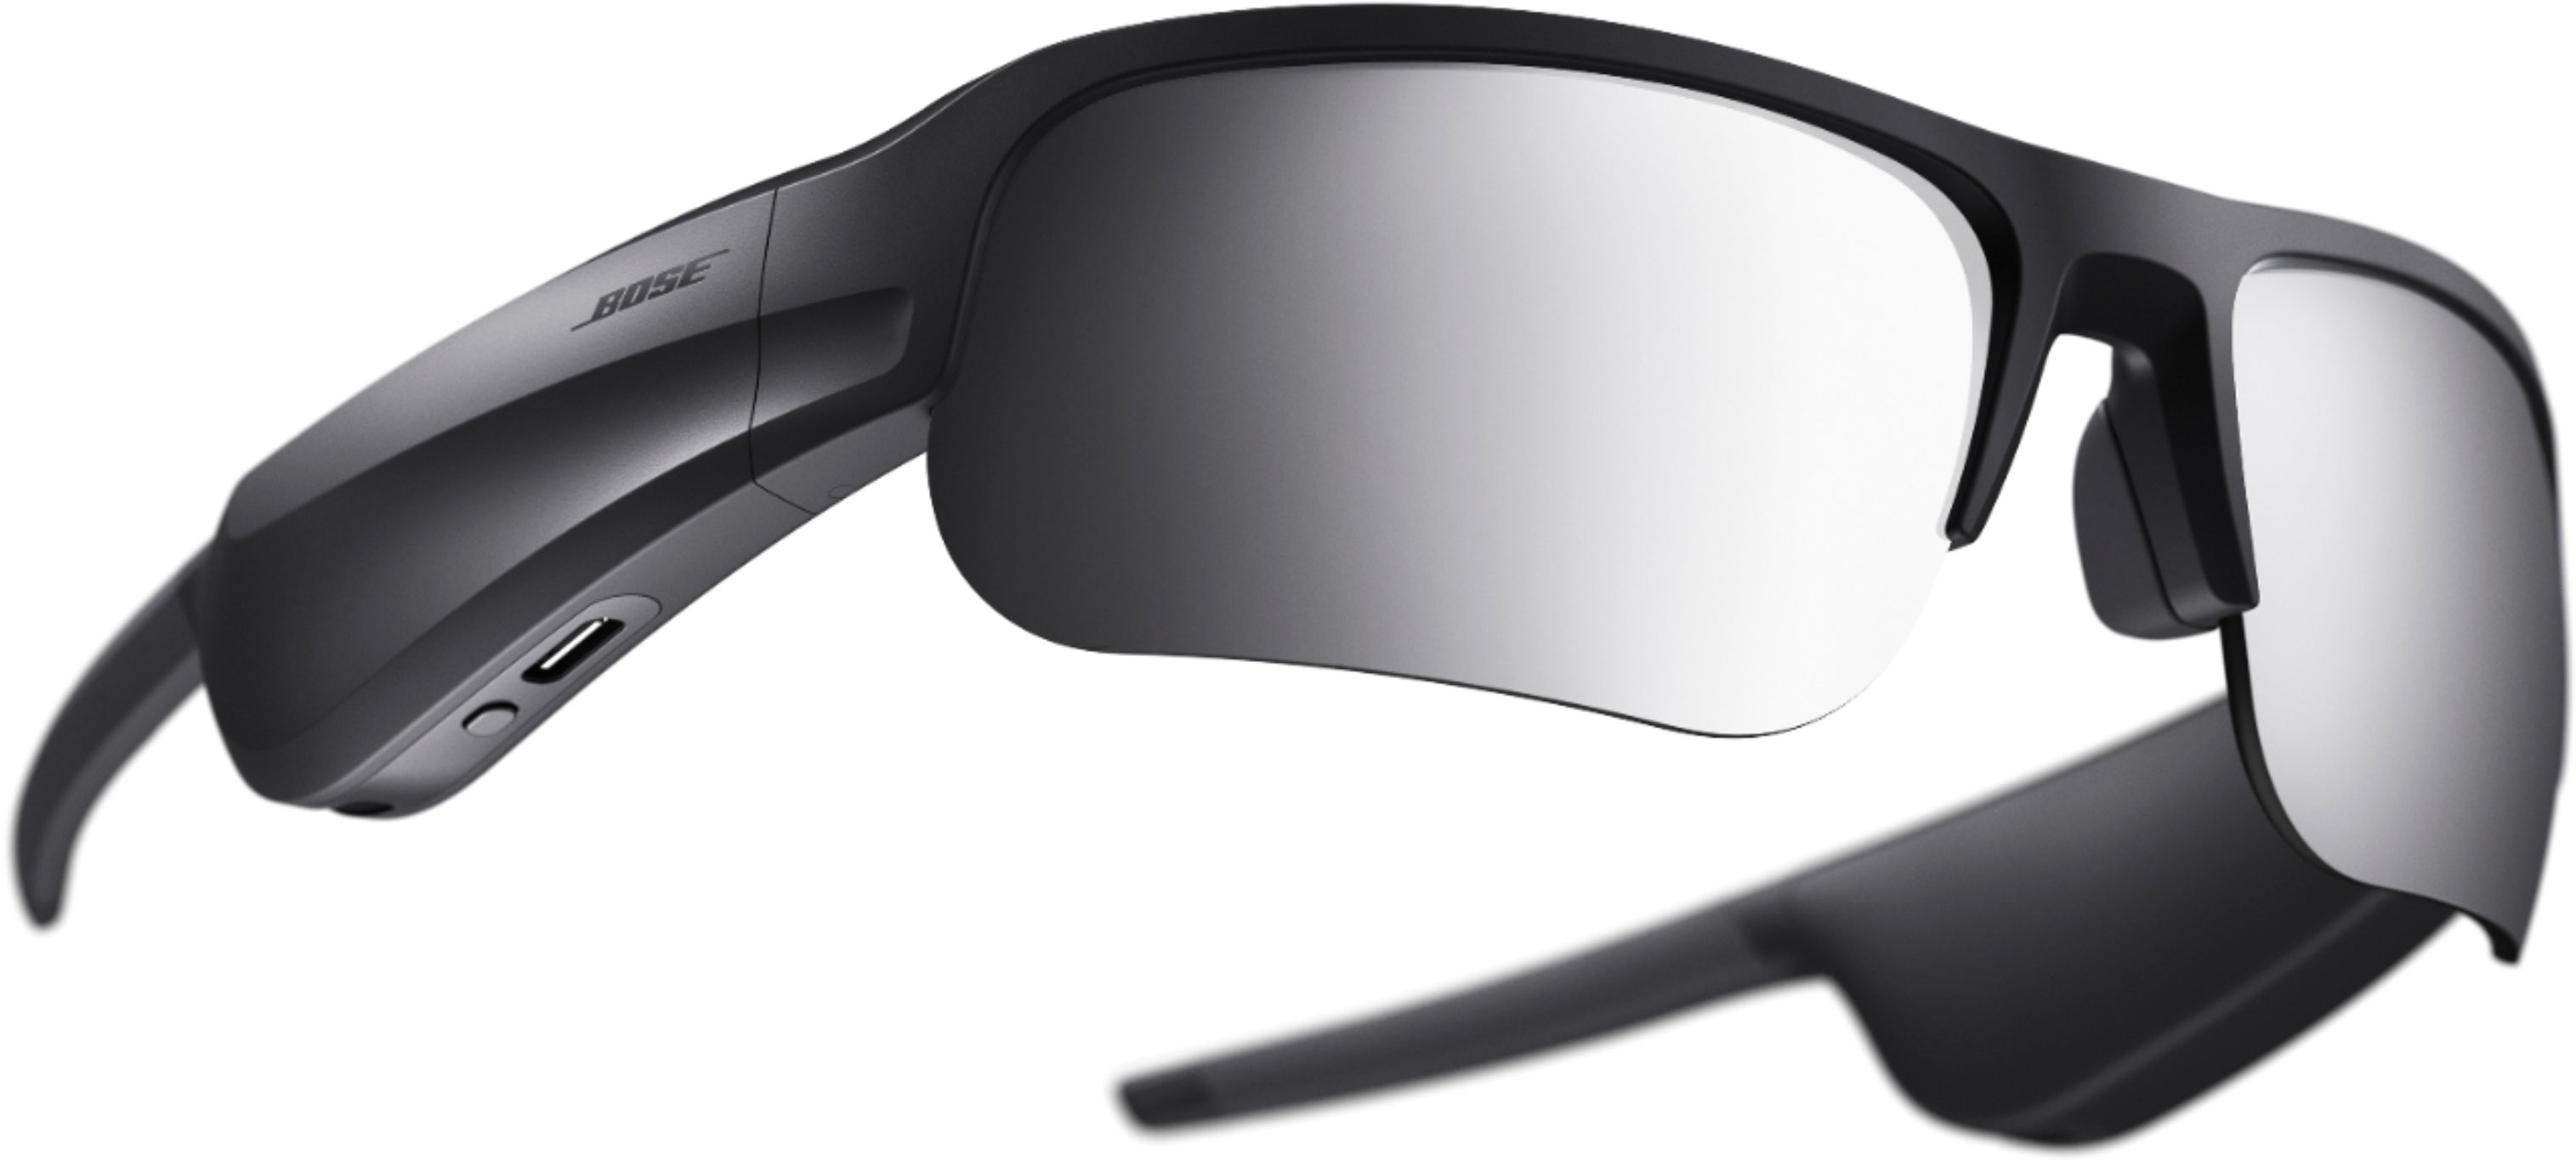 Bose Frames Tempo – Sports Audio Sunglasses with Polarized 